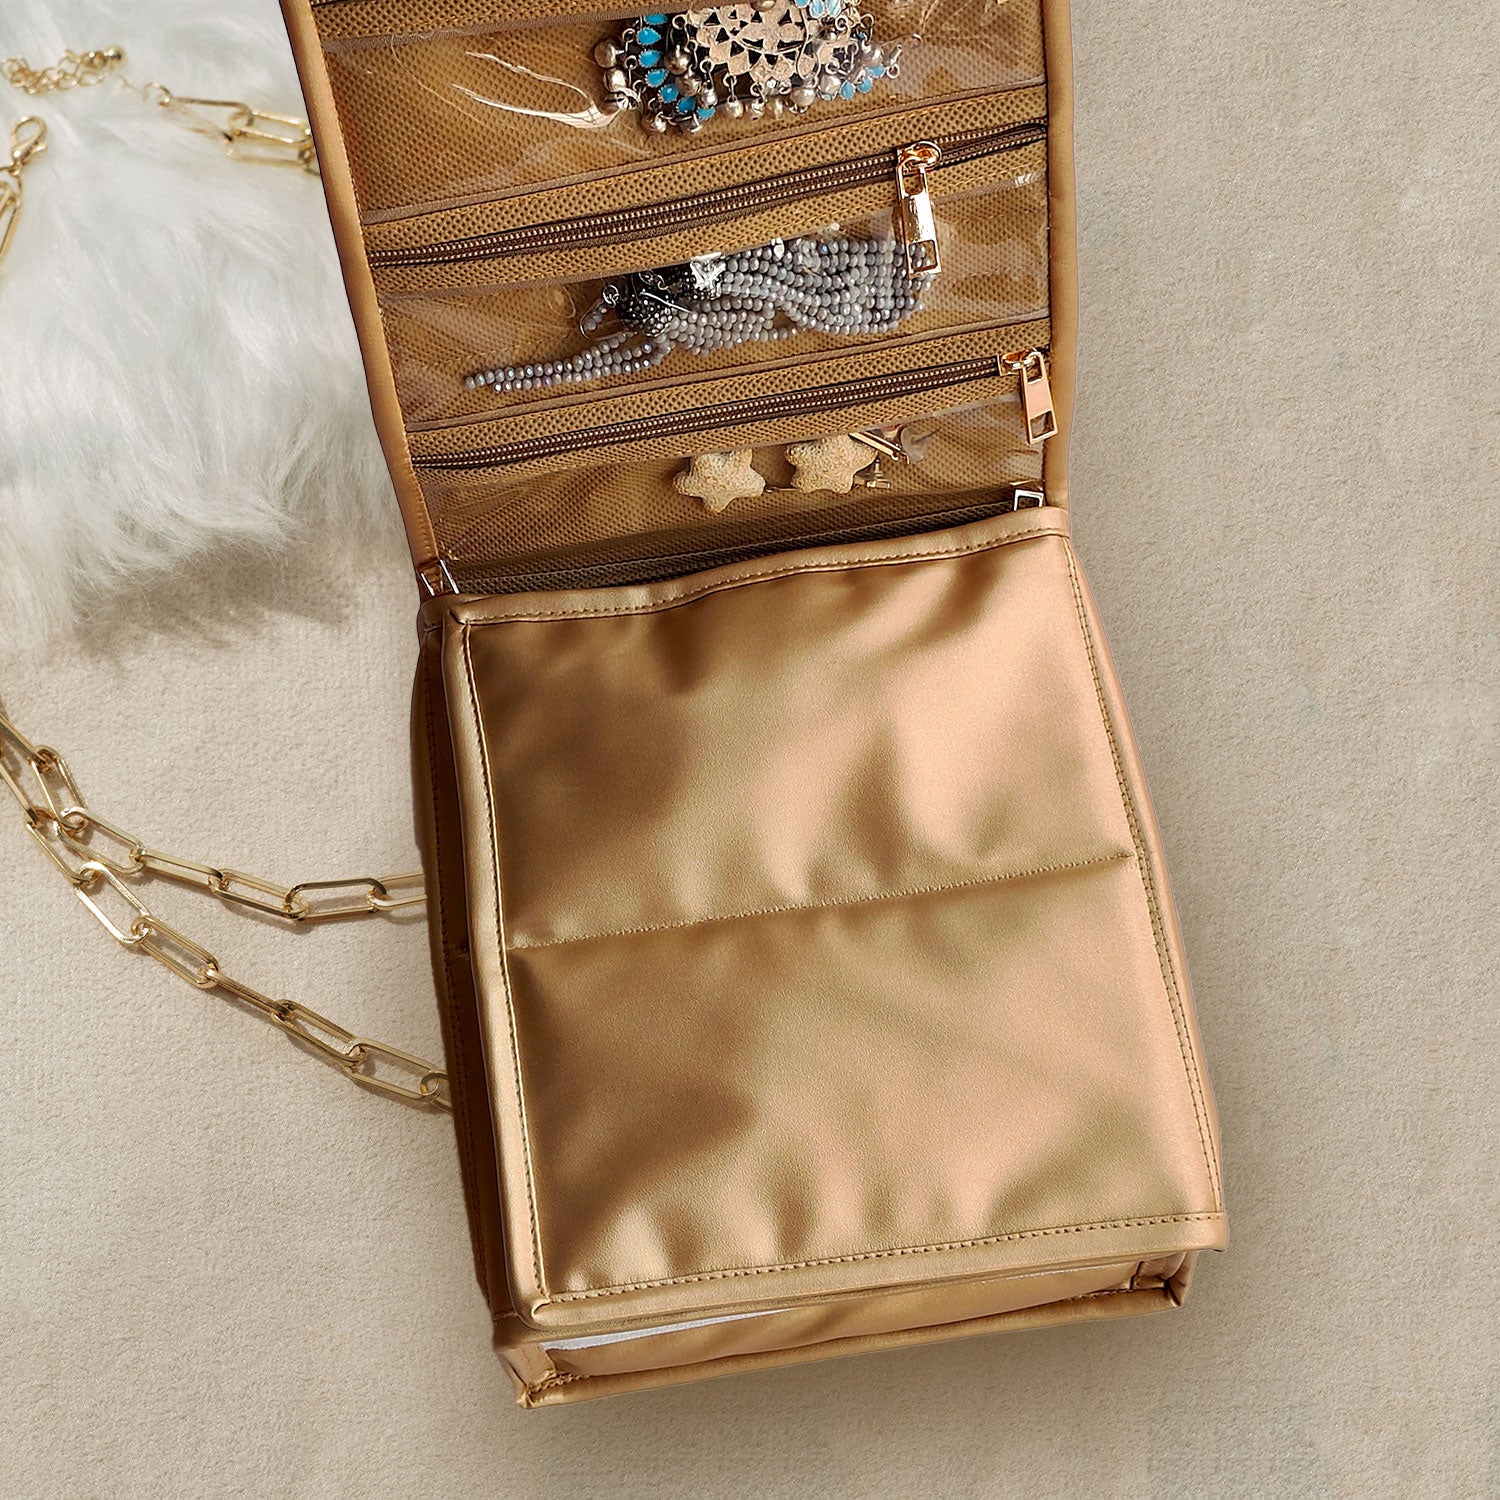 Travel Jewelry Organizer Case - Victoria Frederick's Jewelry Box